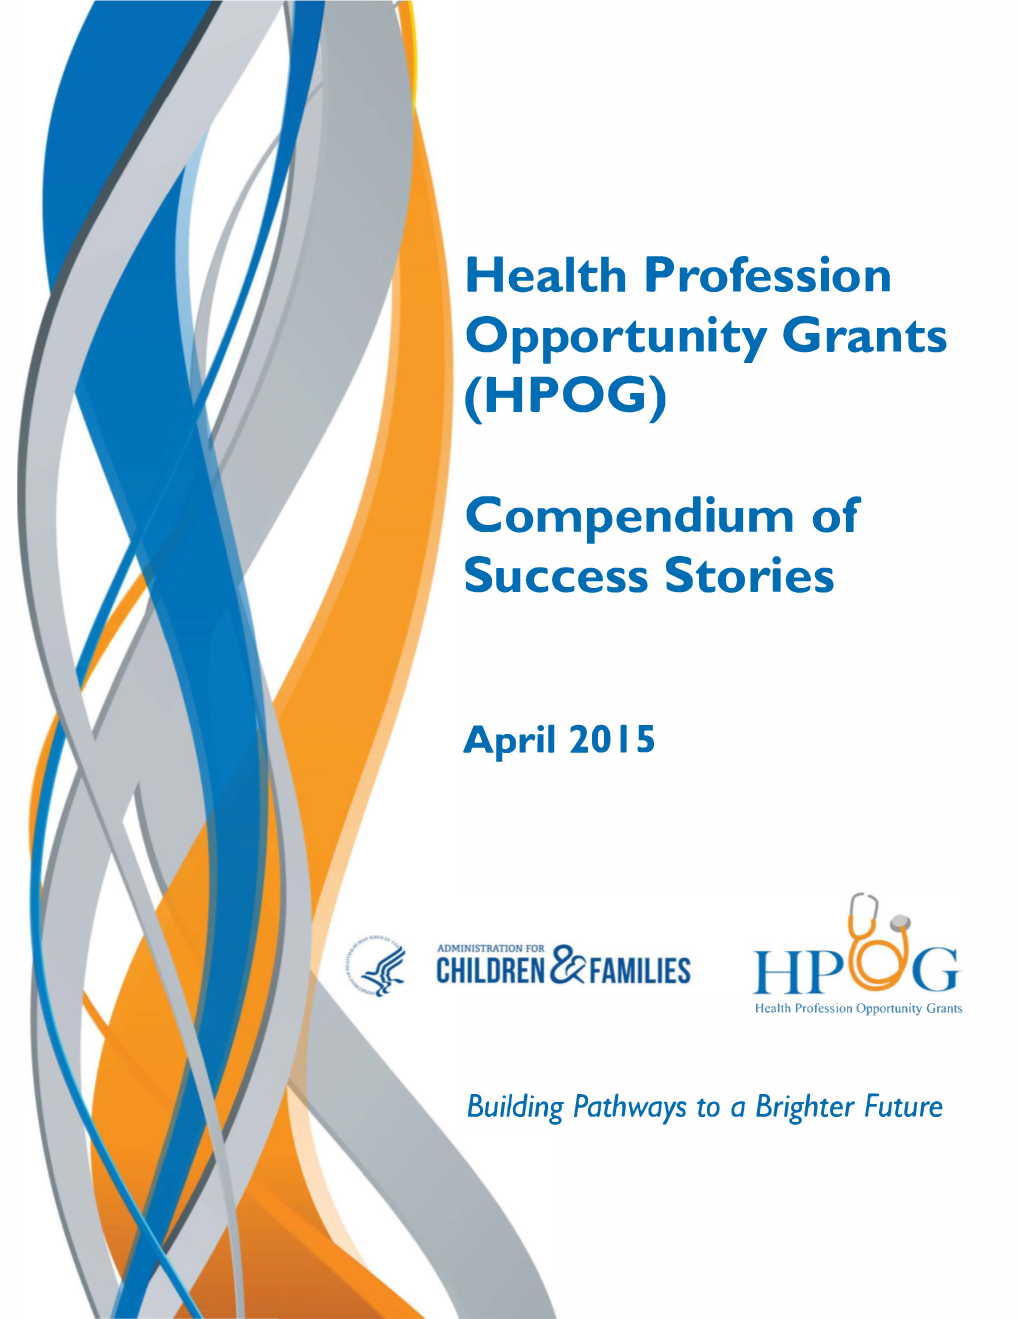 Health Profession Opportunity Grants (HPOG) Compendium of Success